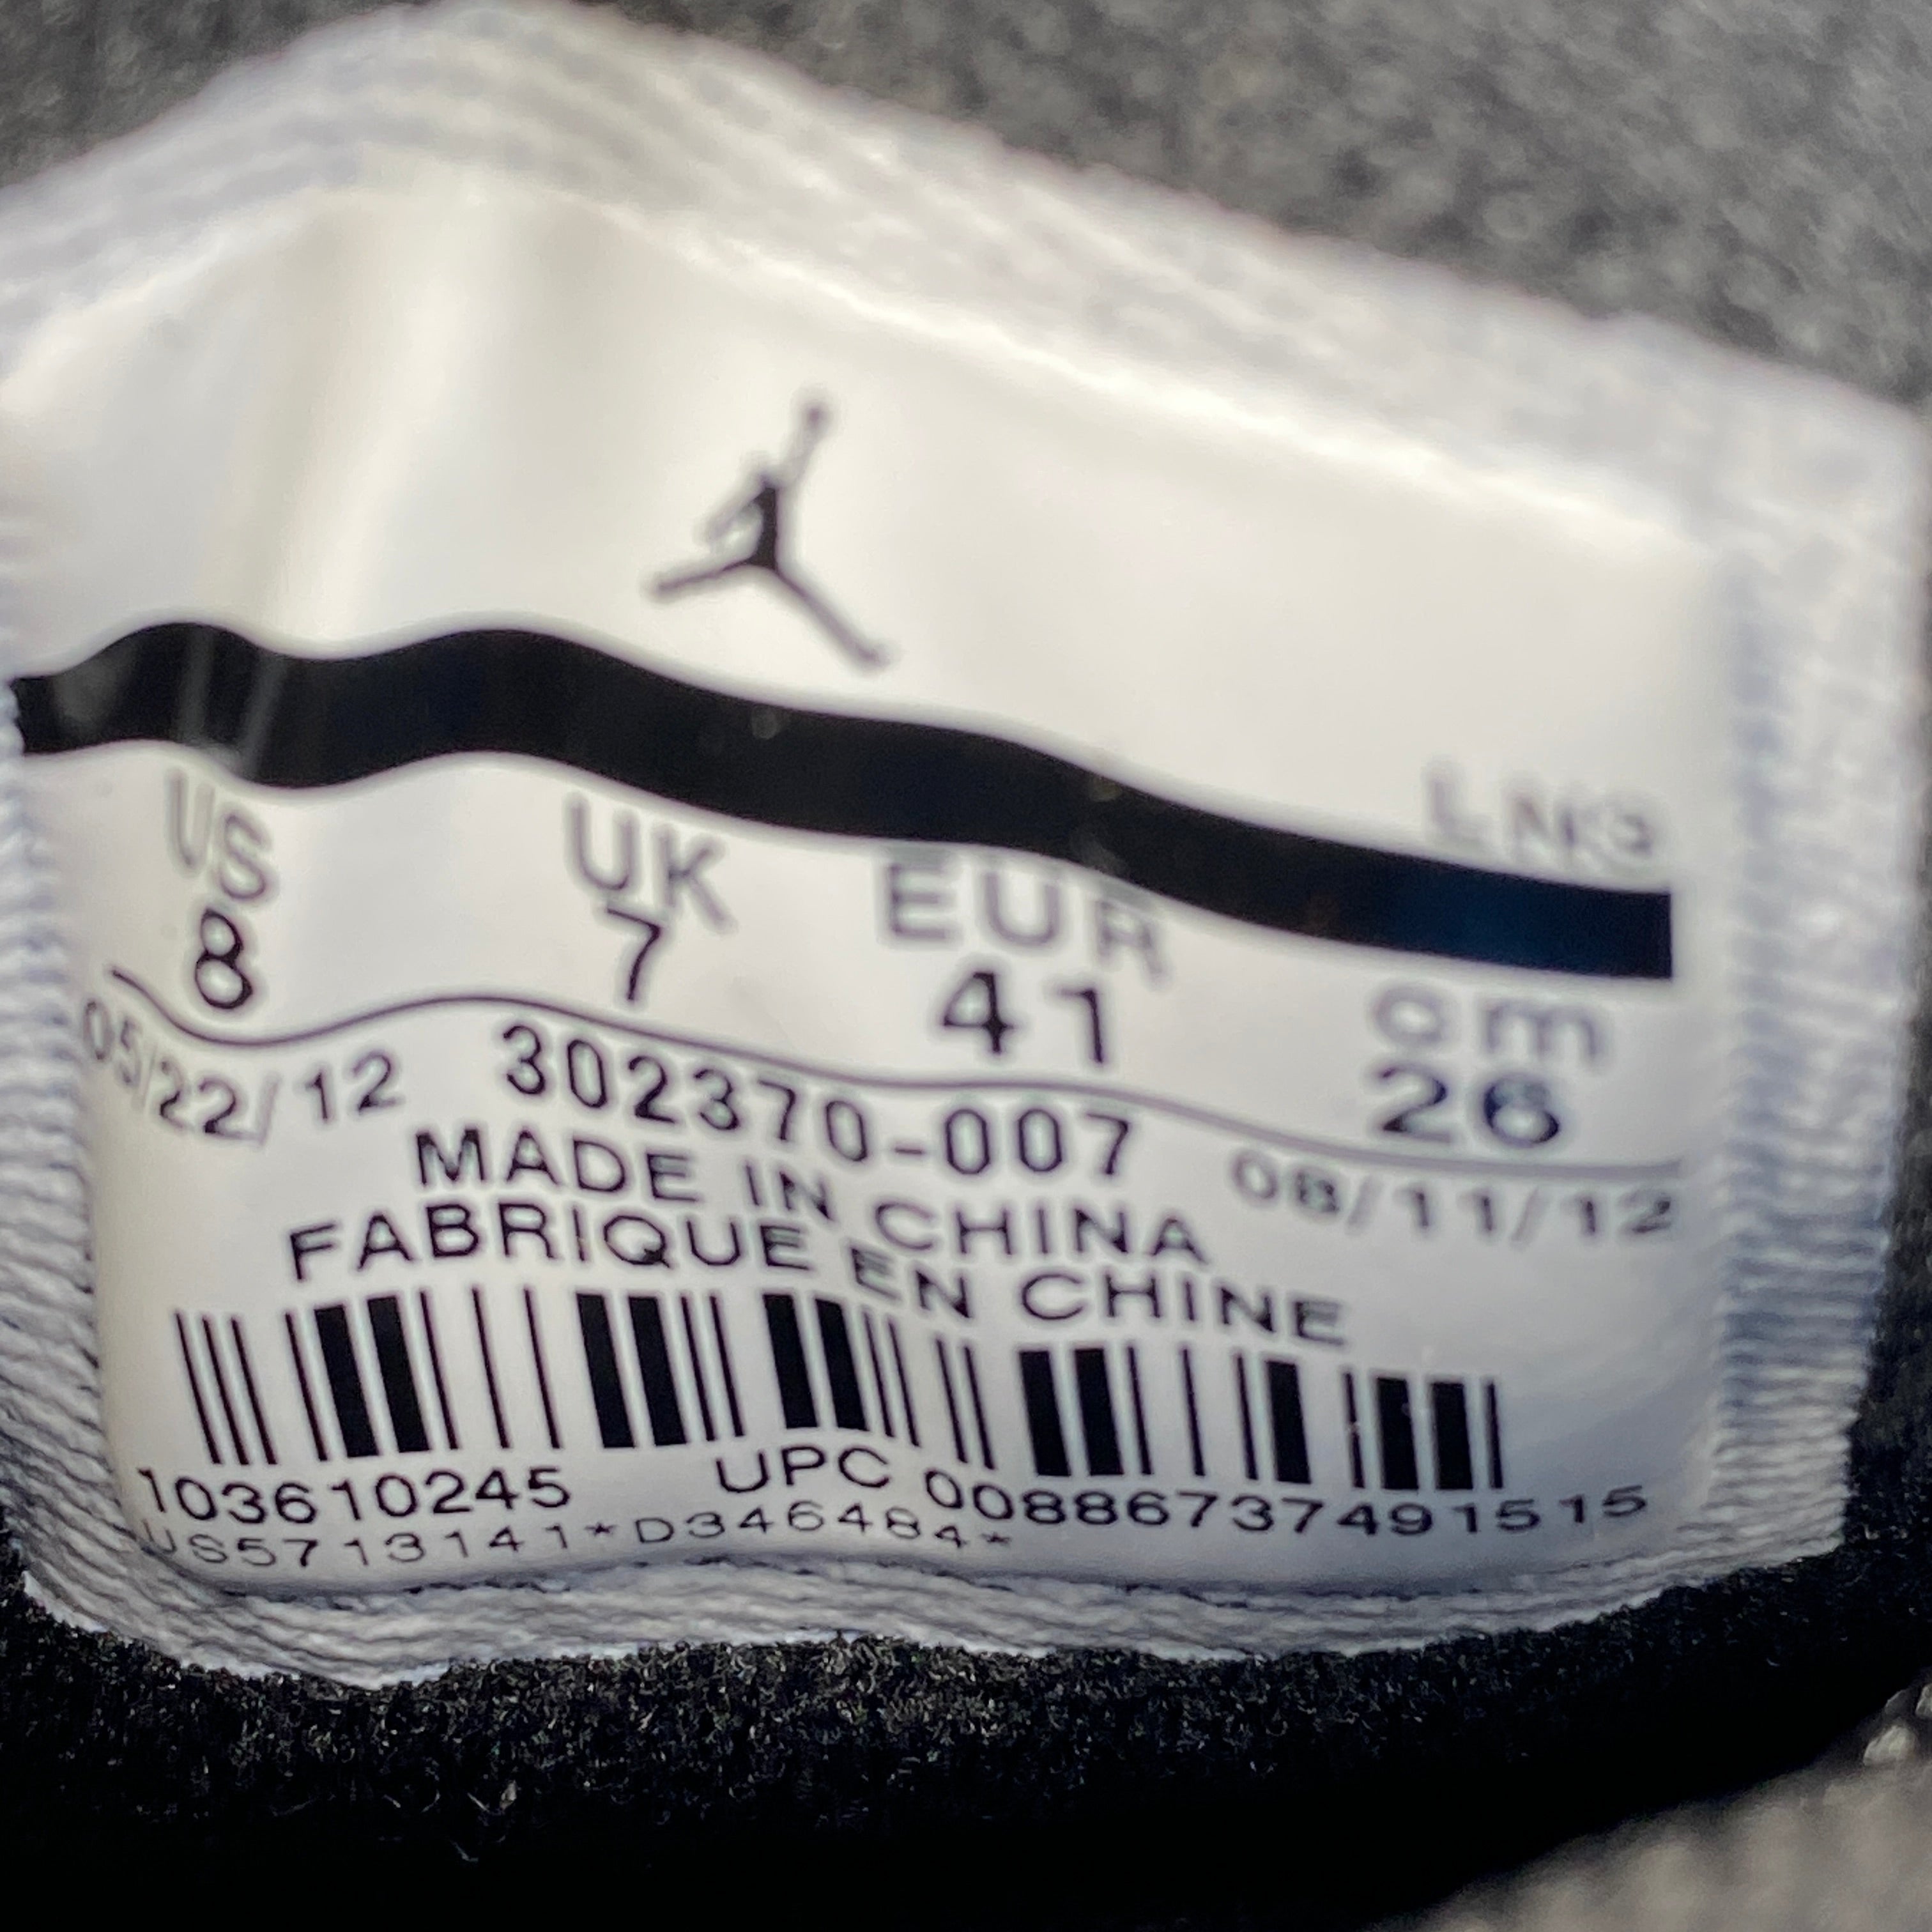 Air Jordan 9 Retro "Photo Blue" 2012 New Size 8